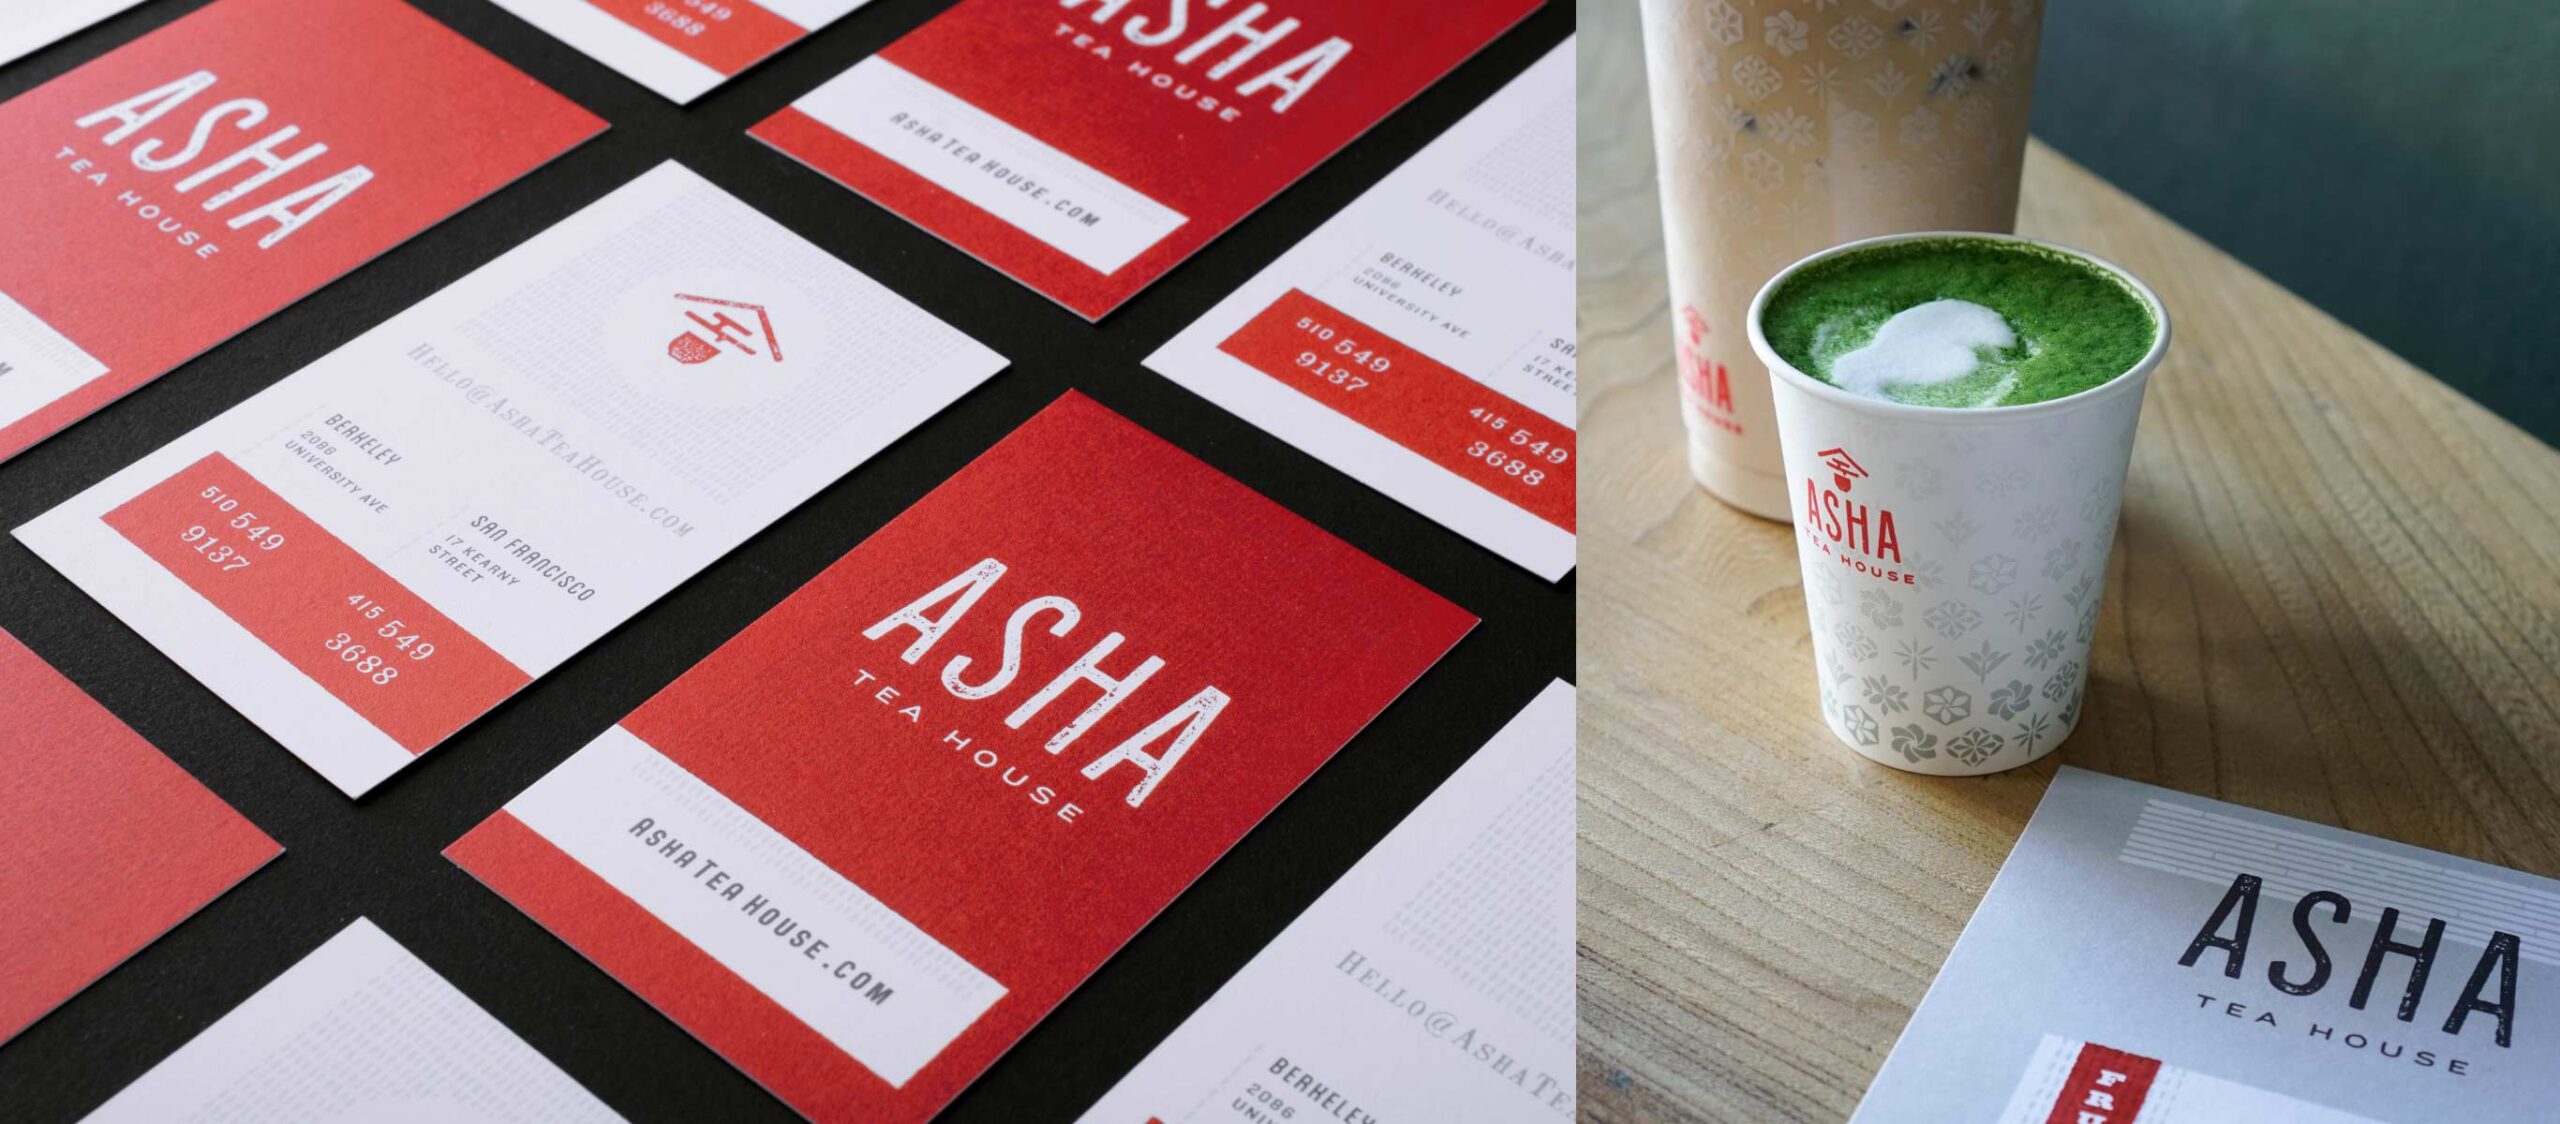 Business cards, paper cup designs, menu for Asha Tea House